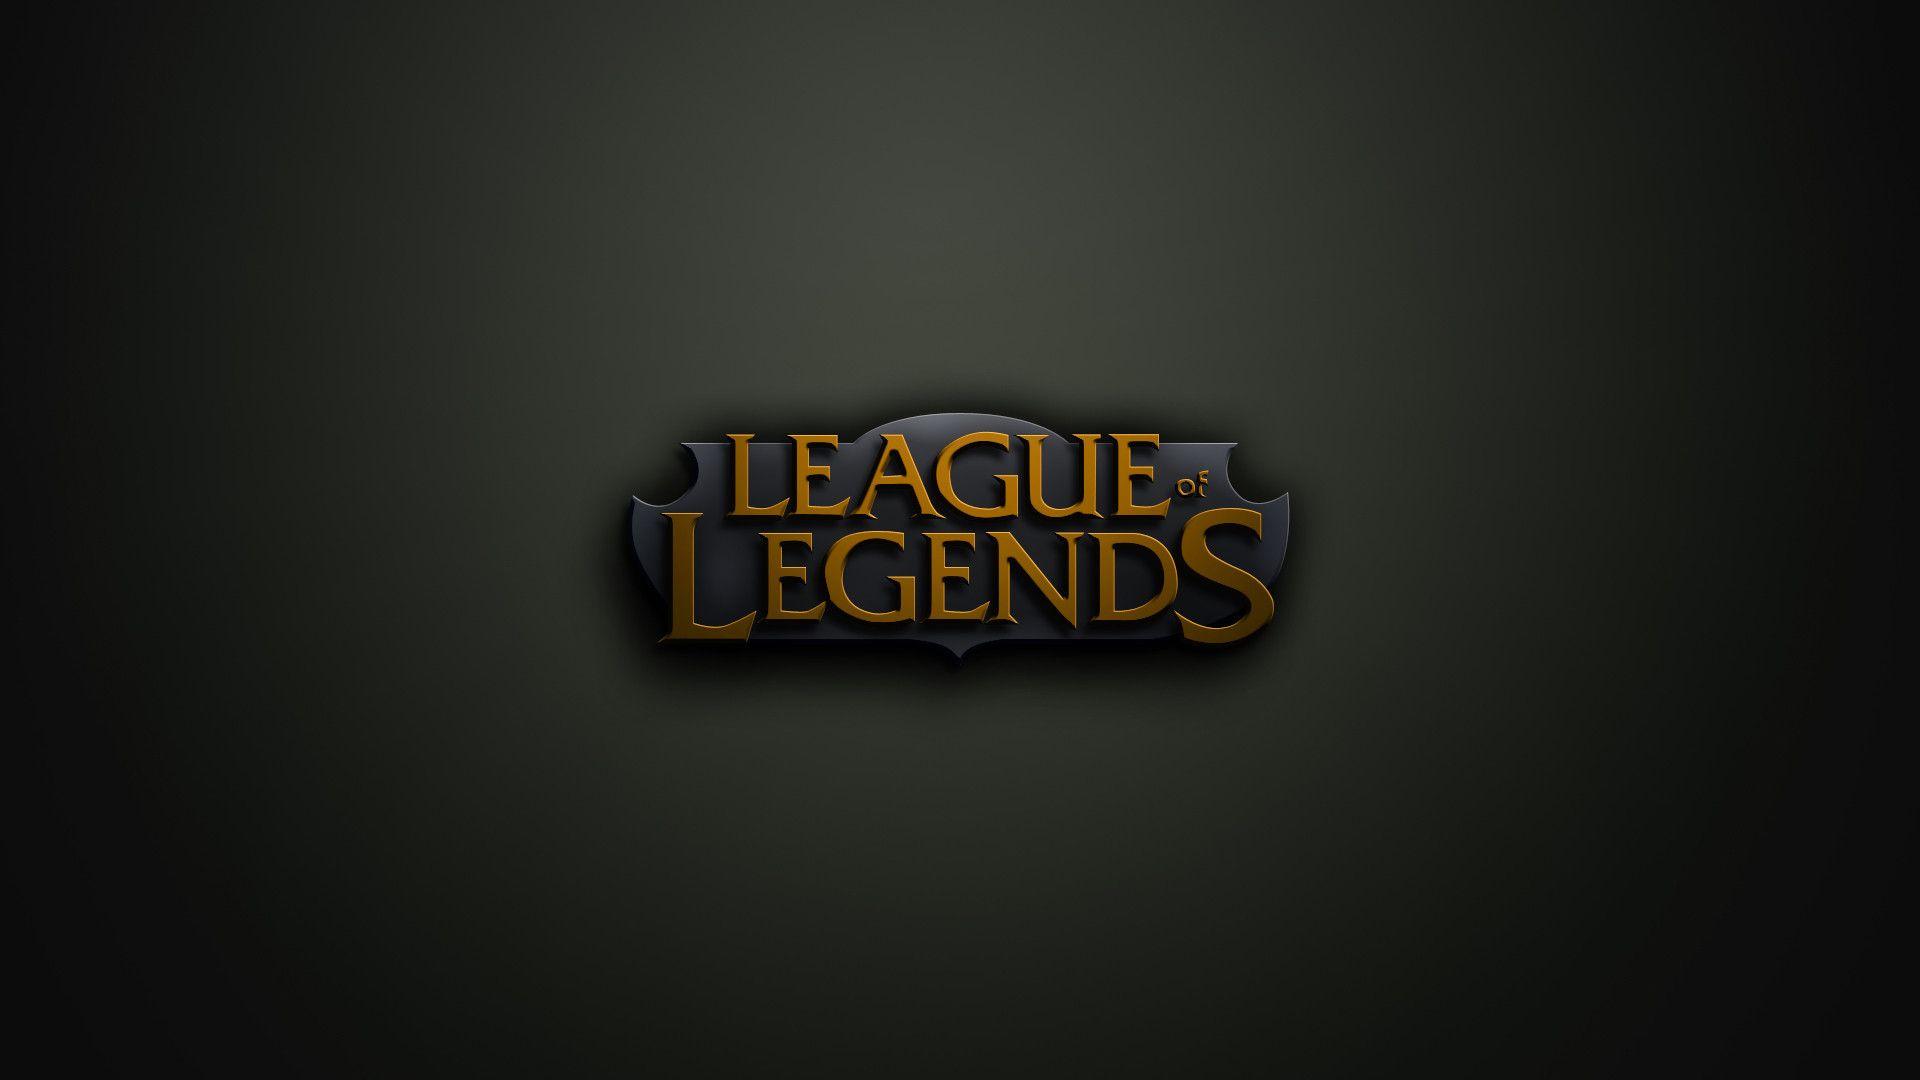 Mobile Legends Logo Wallpapers - Top Free Mobile Legends Logo